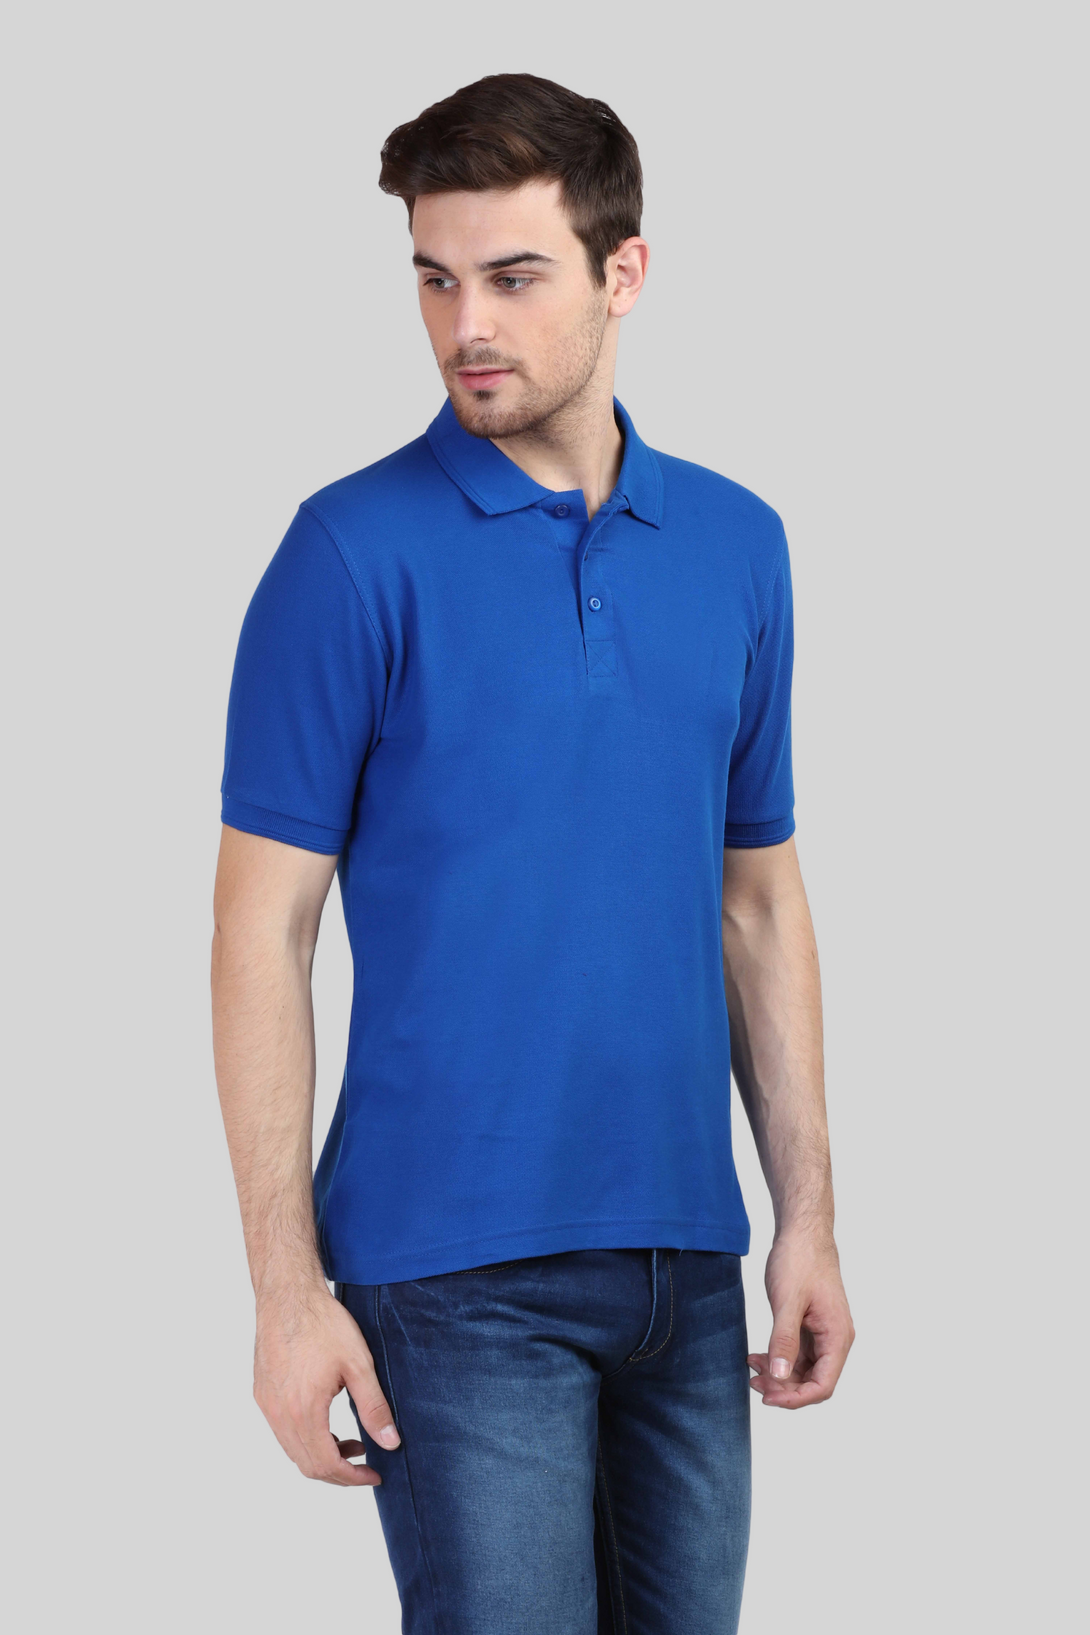 Royal Blue Polo T-Shirt For Men - WowWaves - 6